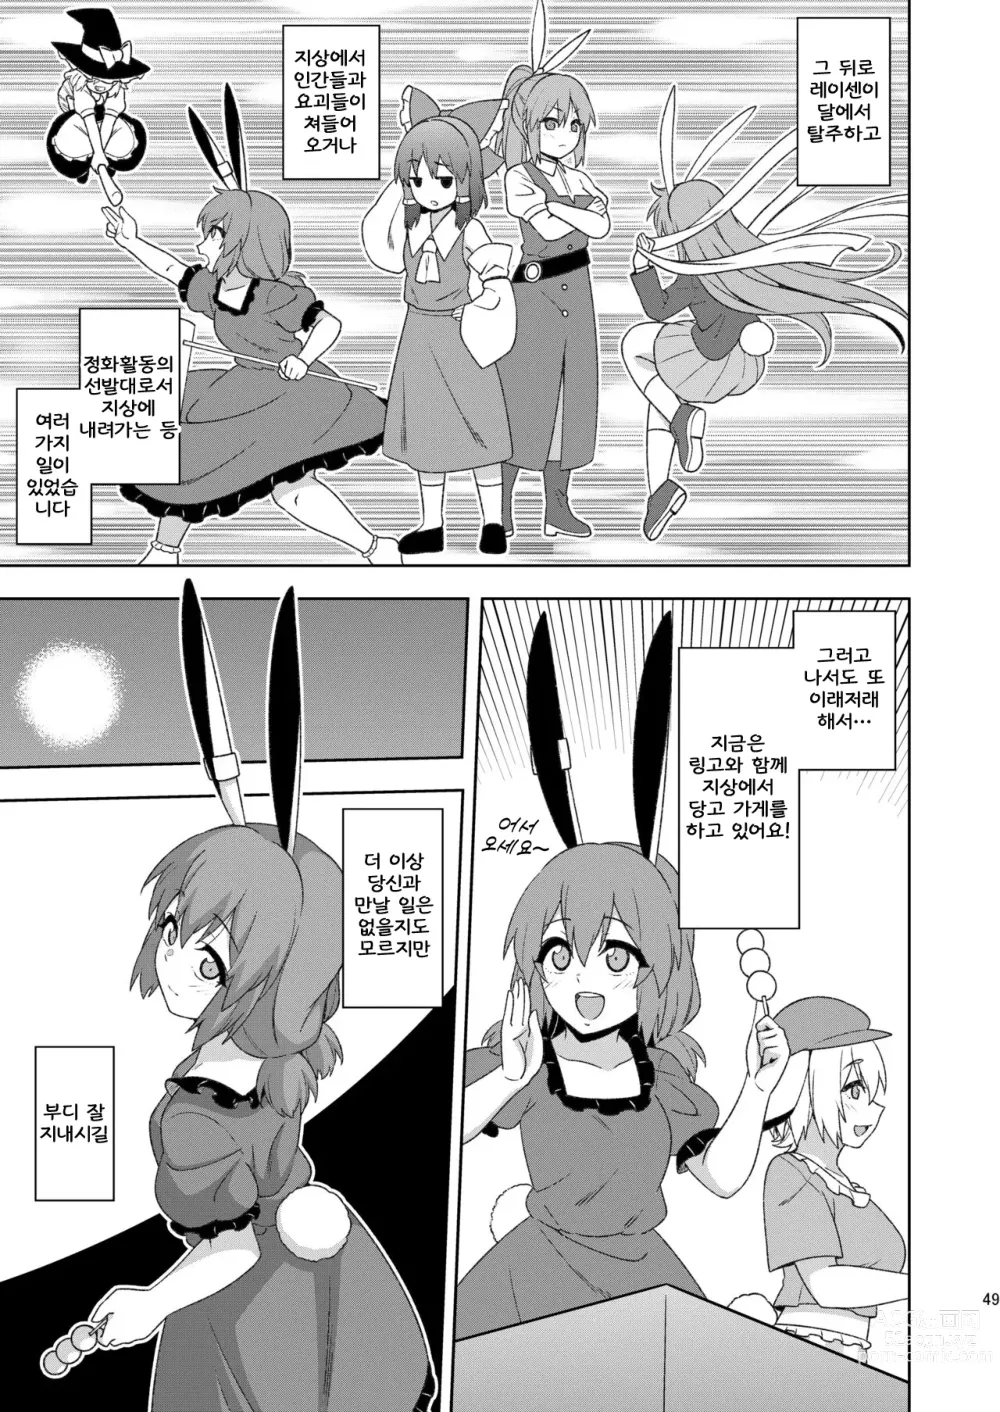 Page 49 of doujinshi 전화의 달토끼